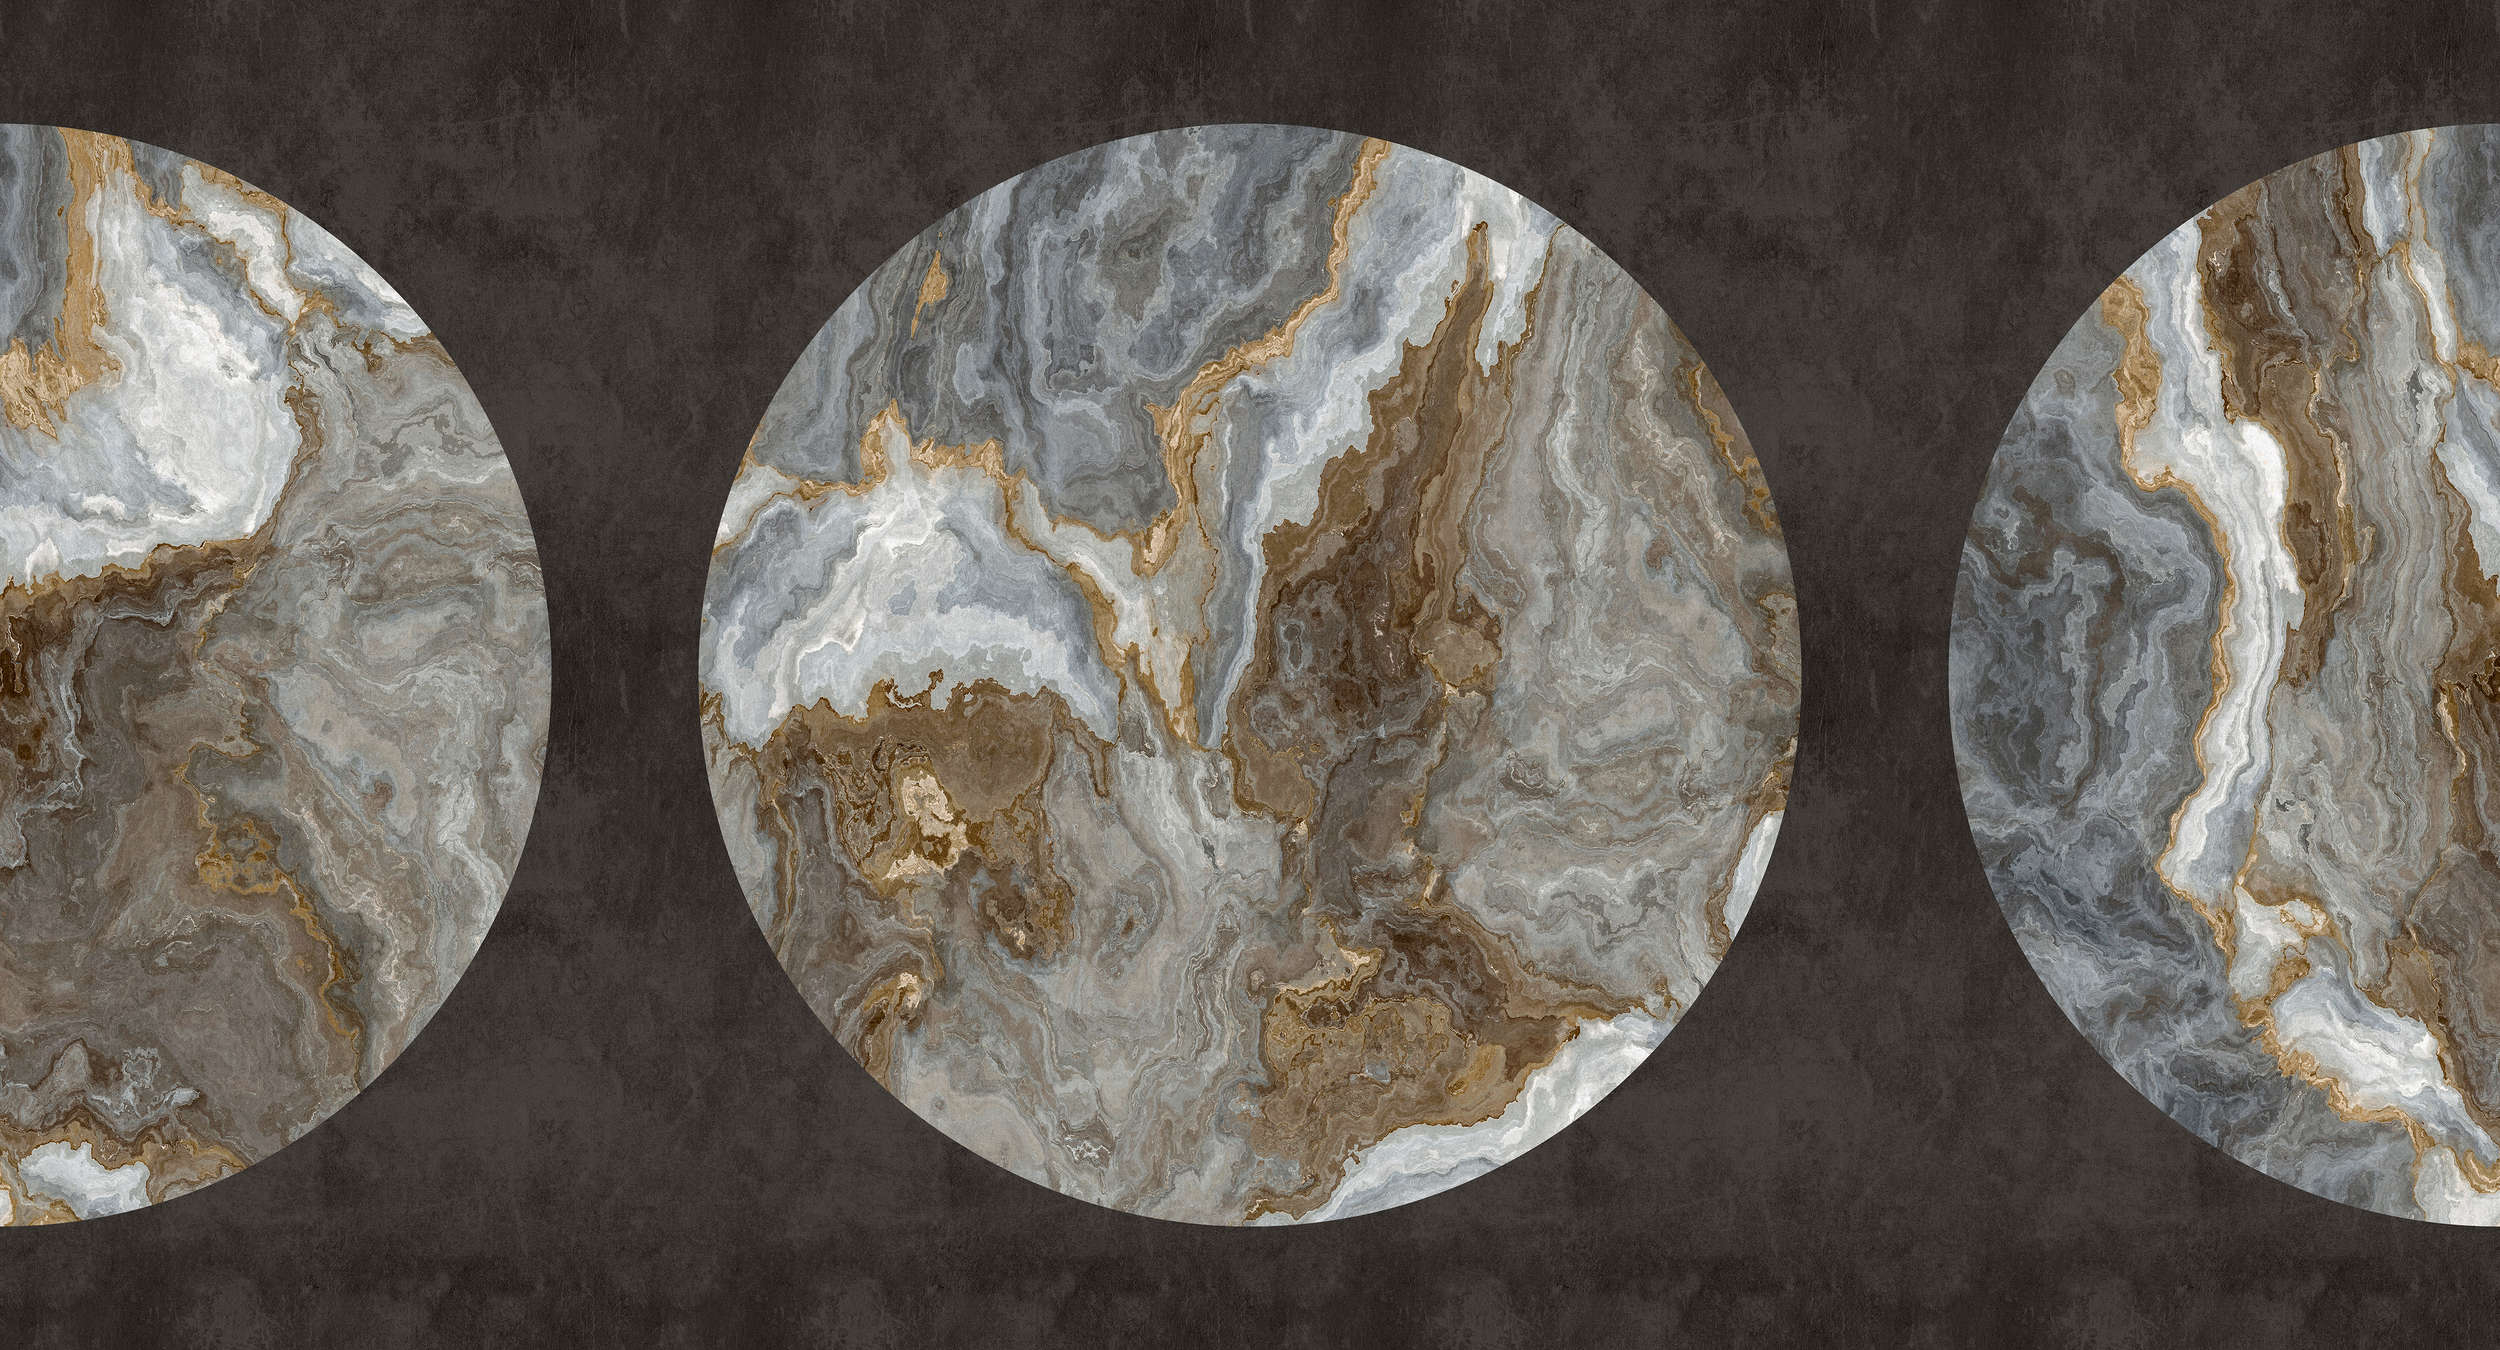             Luna 1 - marble photo wallpaper circle design & black plaster look
        